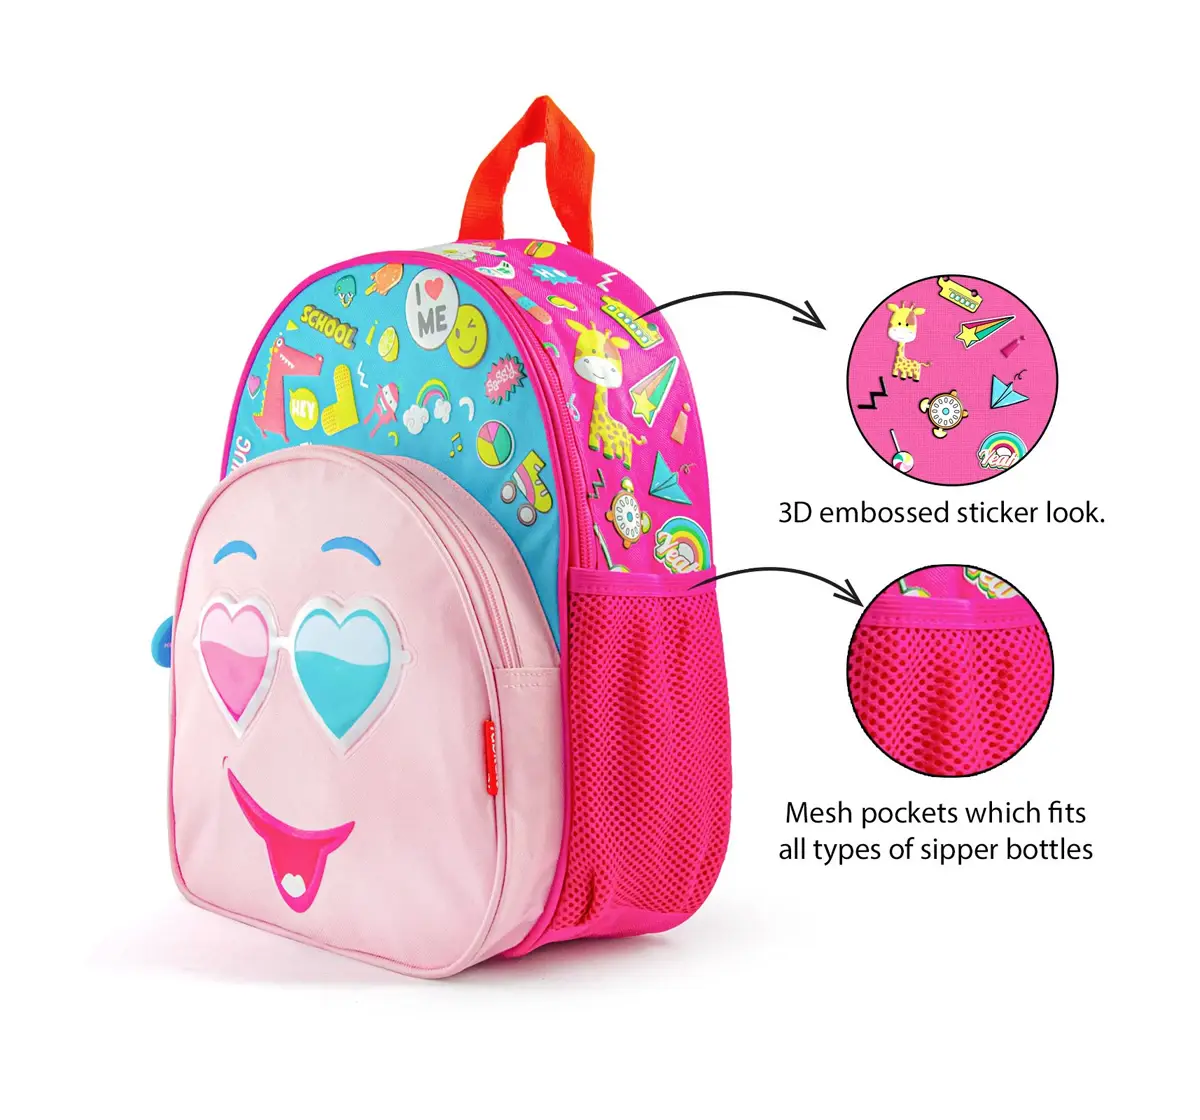 Rabitat Smash School Bag Diva 12 Inches For Kids of Age 2Y+, Multicolour